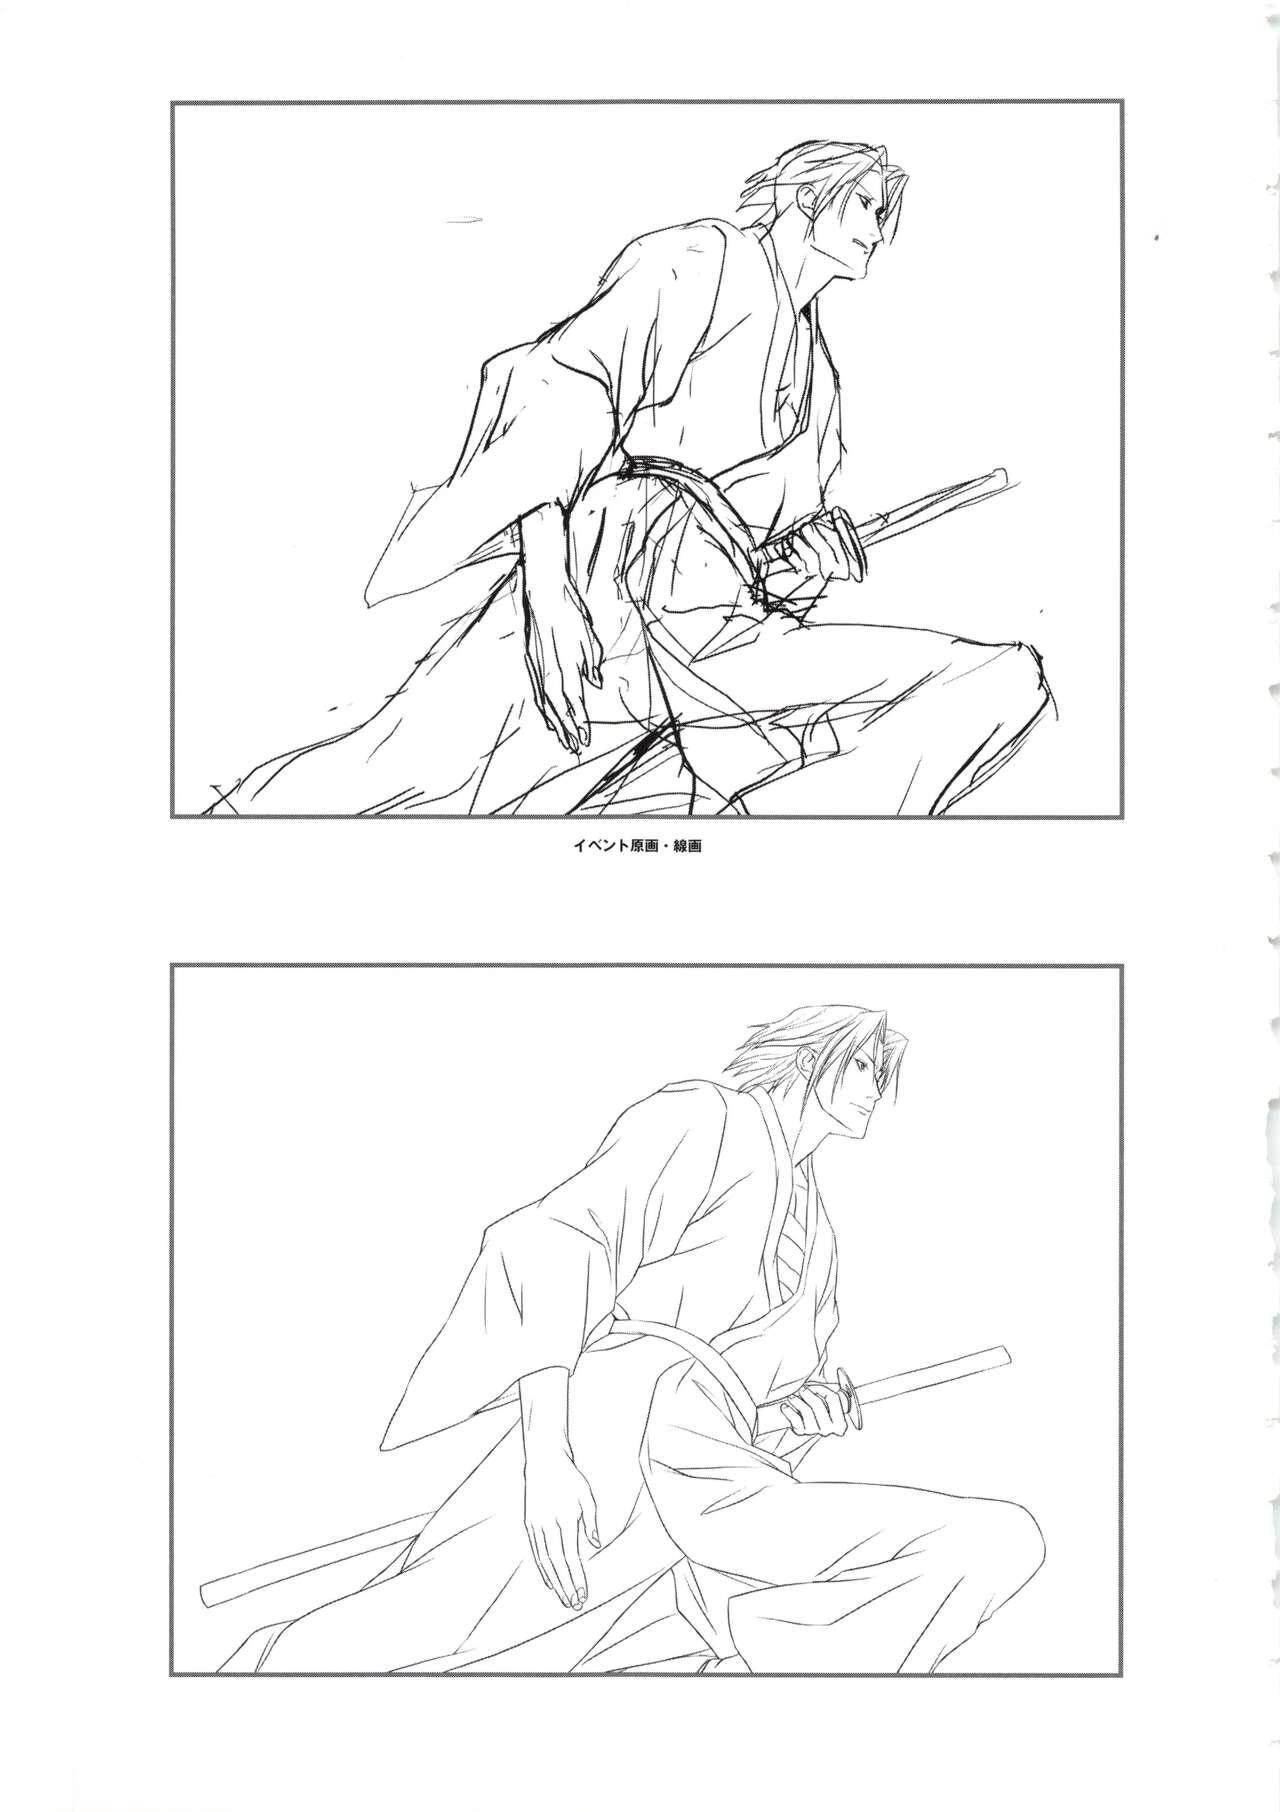 Hanachirasu - Initial Sketches and Unprocessed Illustrations - Selection 39